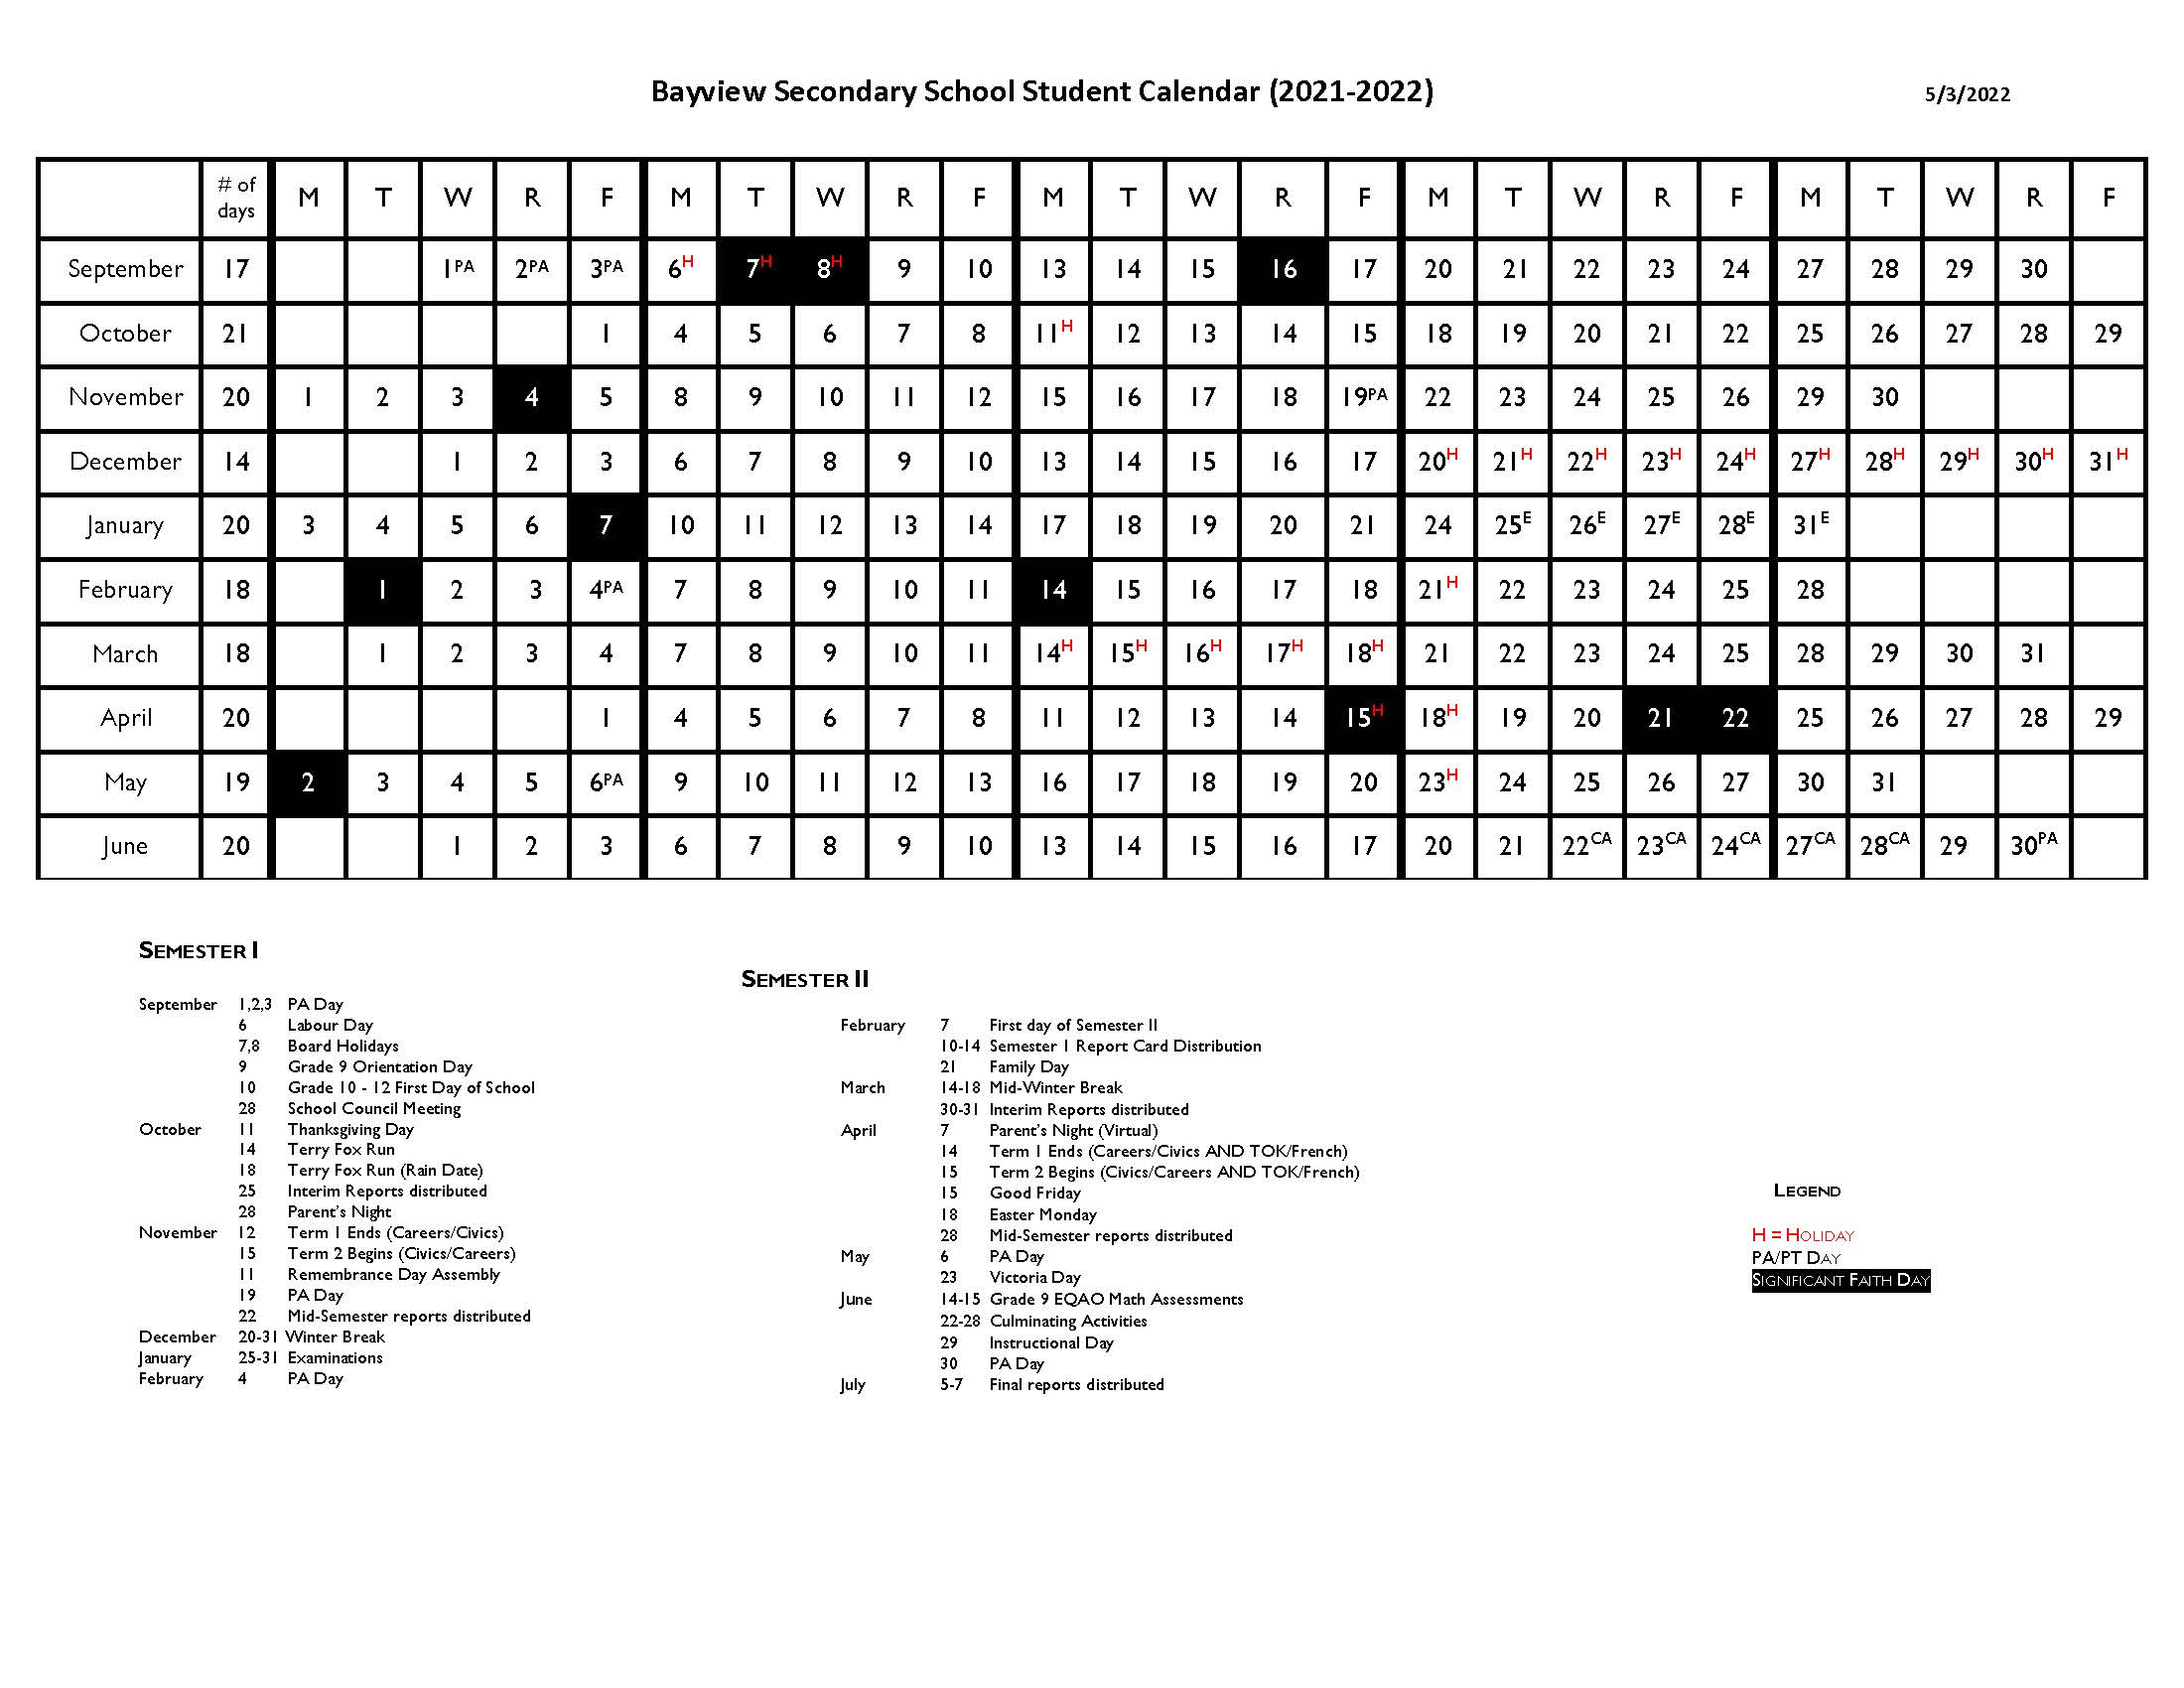 REVISED School Student Calendar (2021-2022).jpg